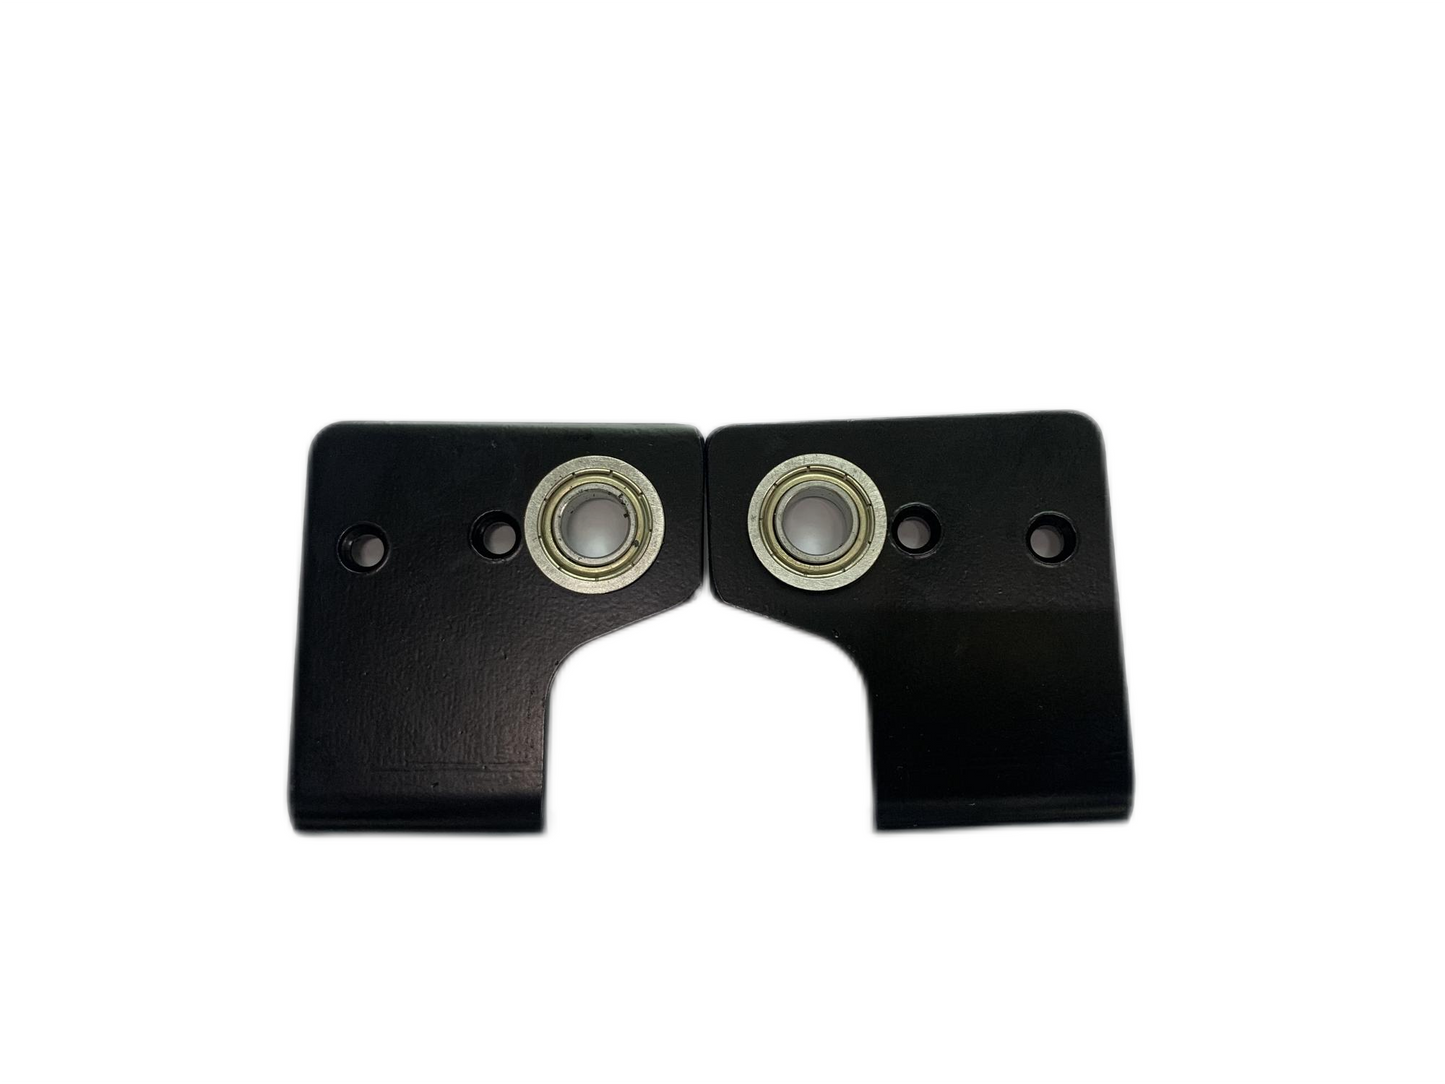 （Pre-sale）Monorim LR01 Turn signal & Projection Decorative Light for Segway Ninebot Max G30 LD, Scooter Blinker